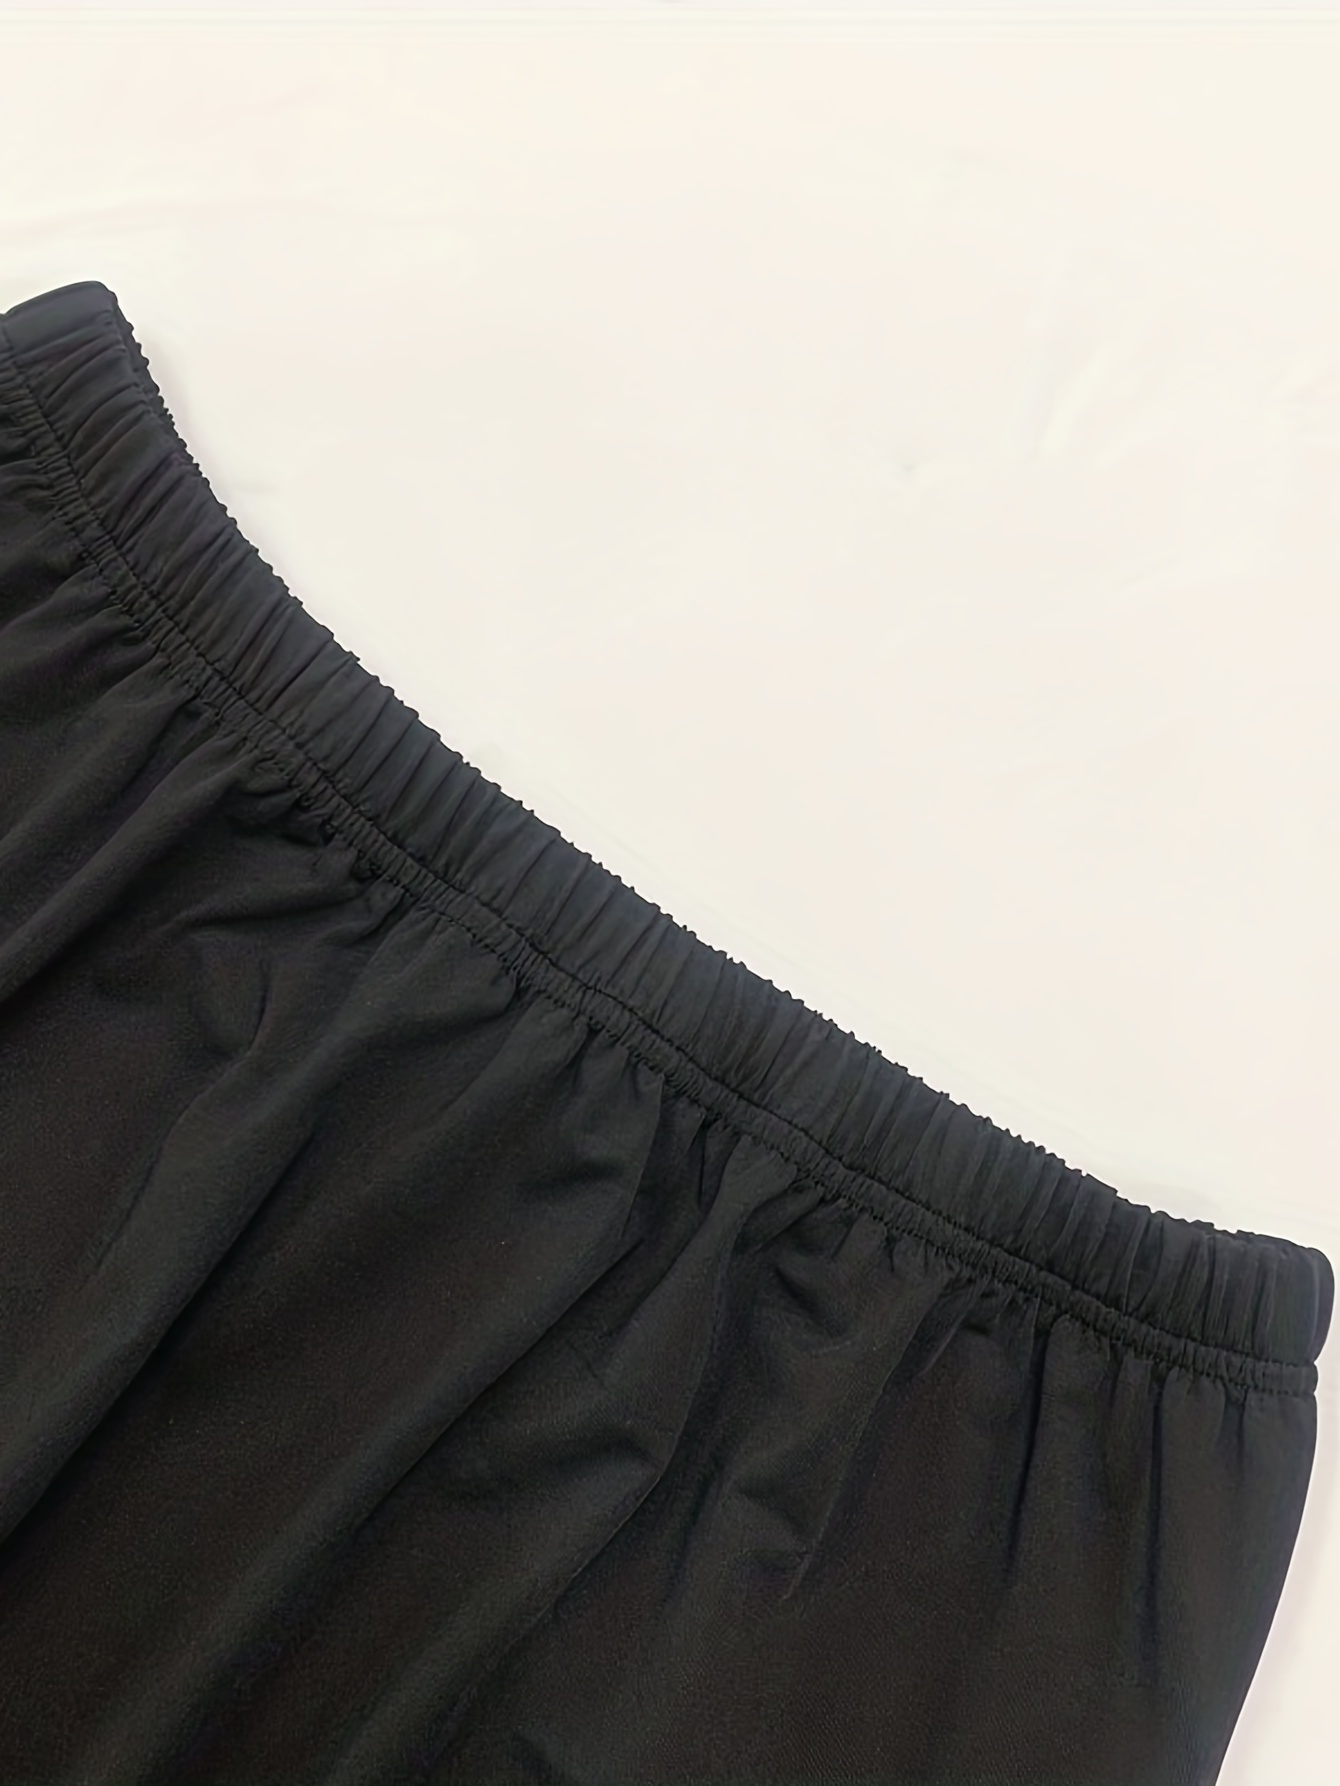 Women's Half Slips Lace Trim Underskirt Anti Static Skirts Slips for Under  Dresses Curved Half Slip Sleepwear